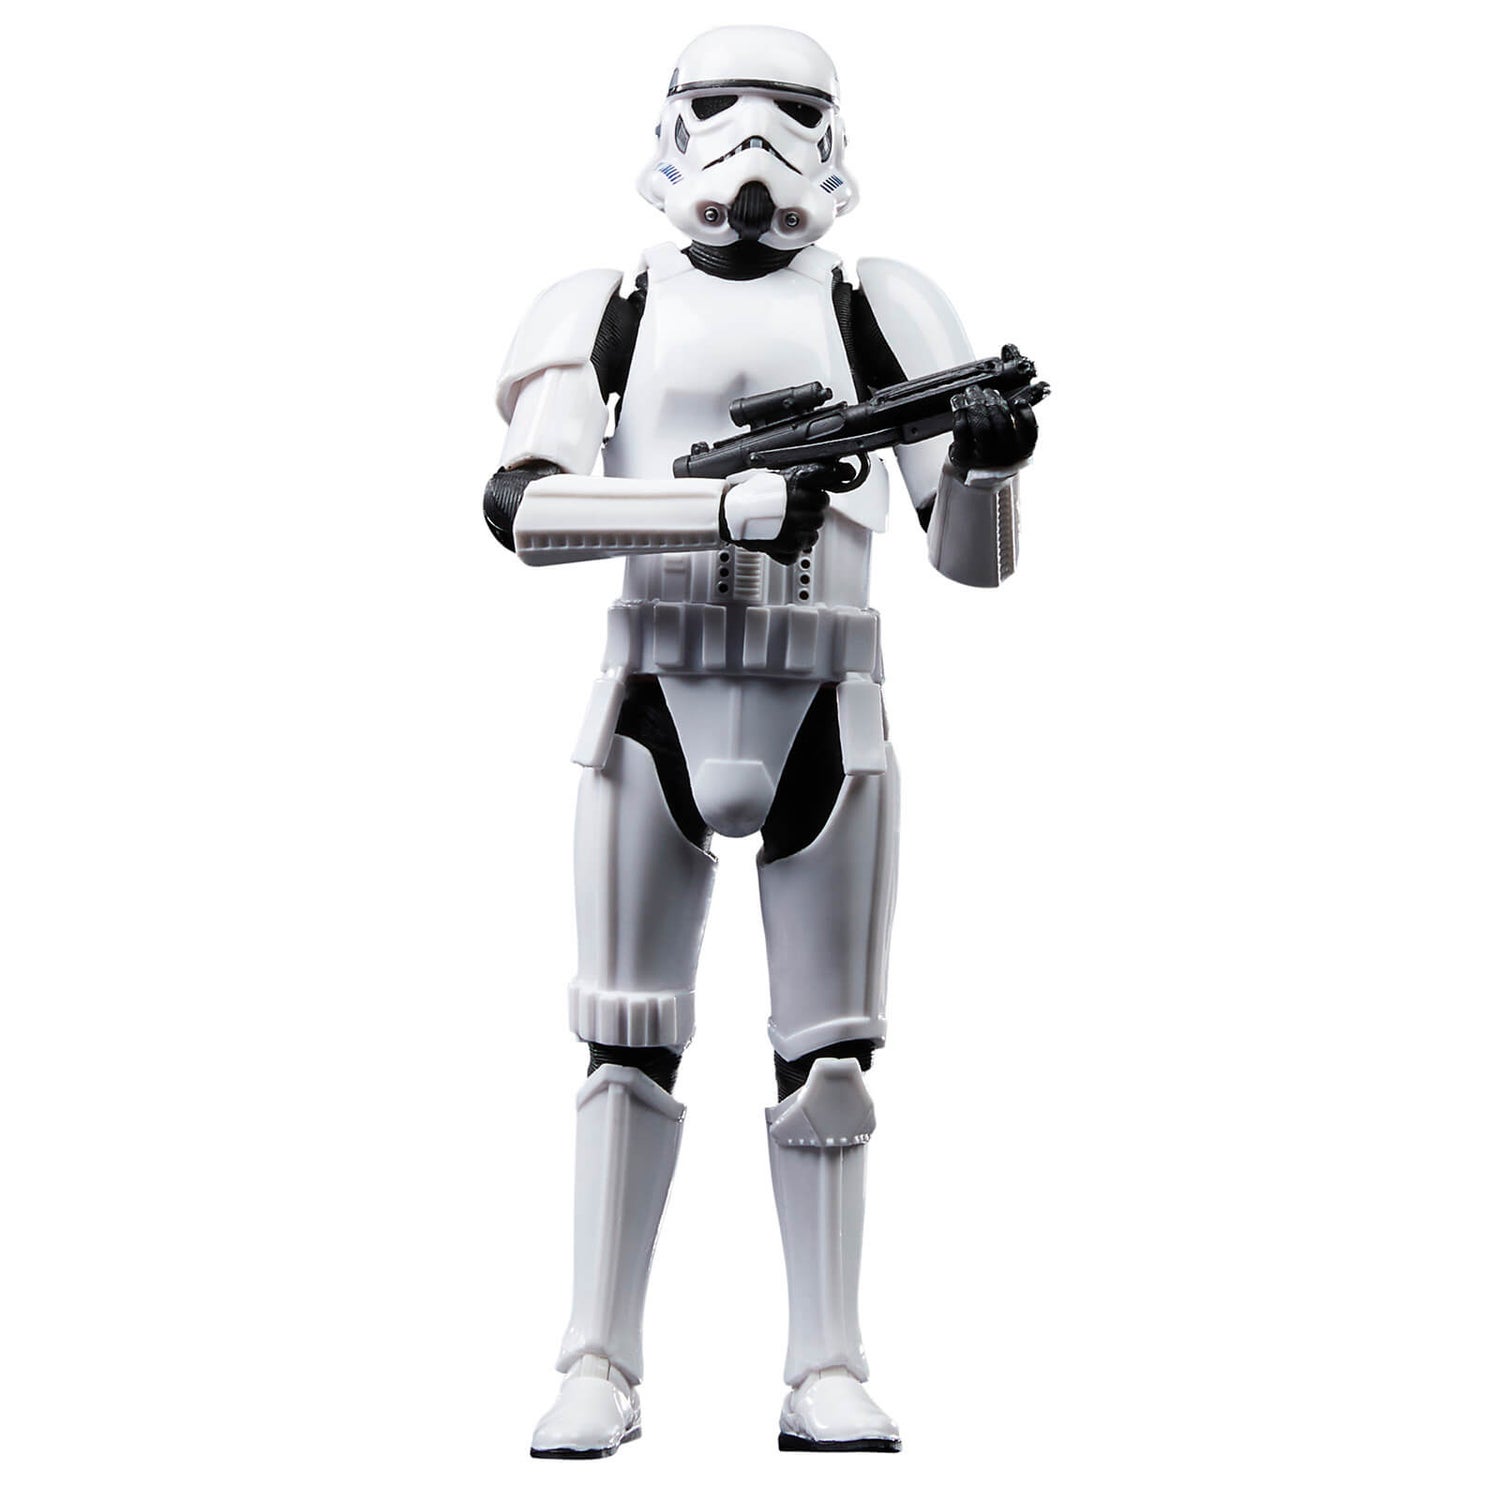 Hasbro Star Wars The Black Series Stormtrooper Action Figure